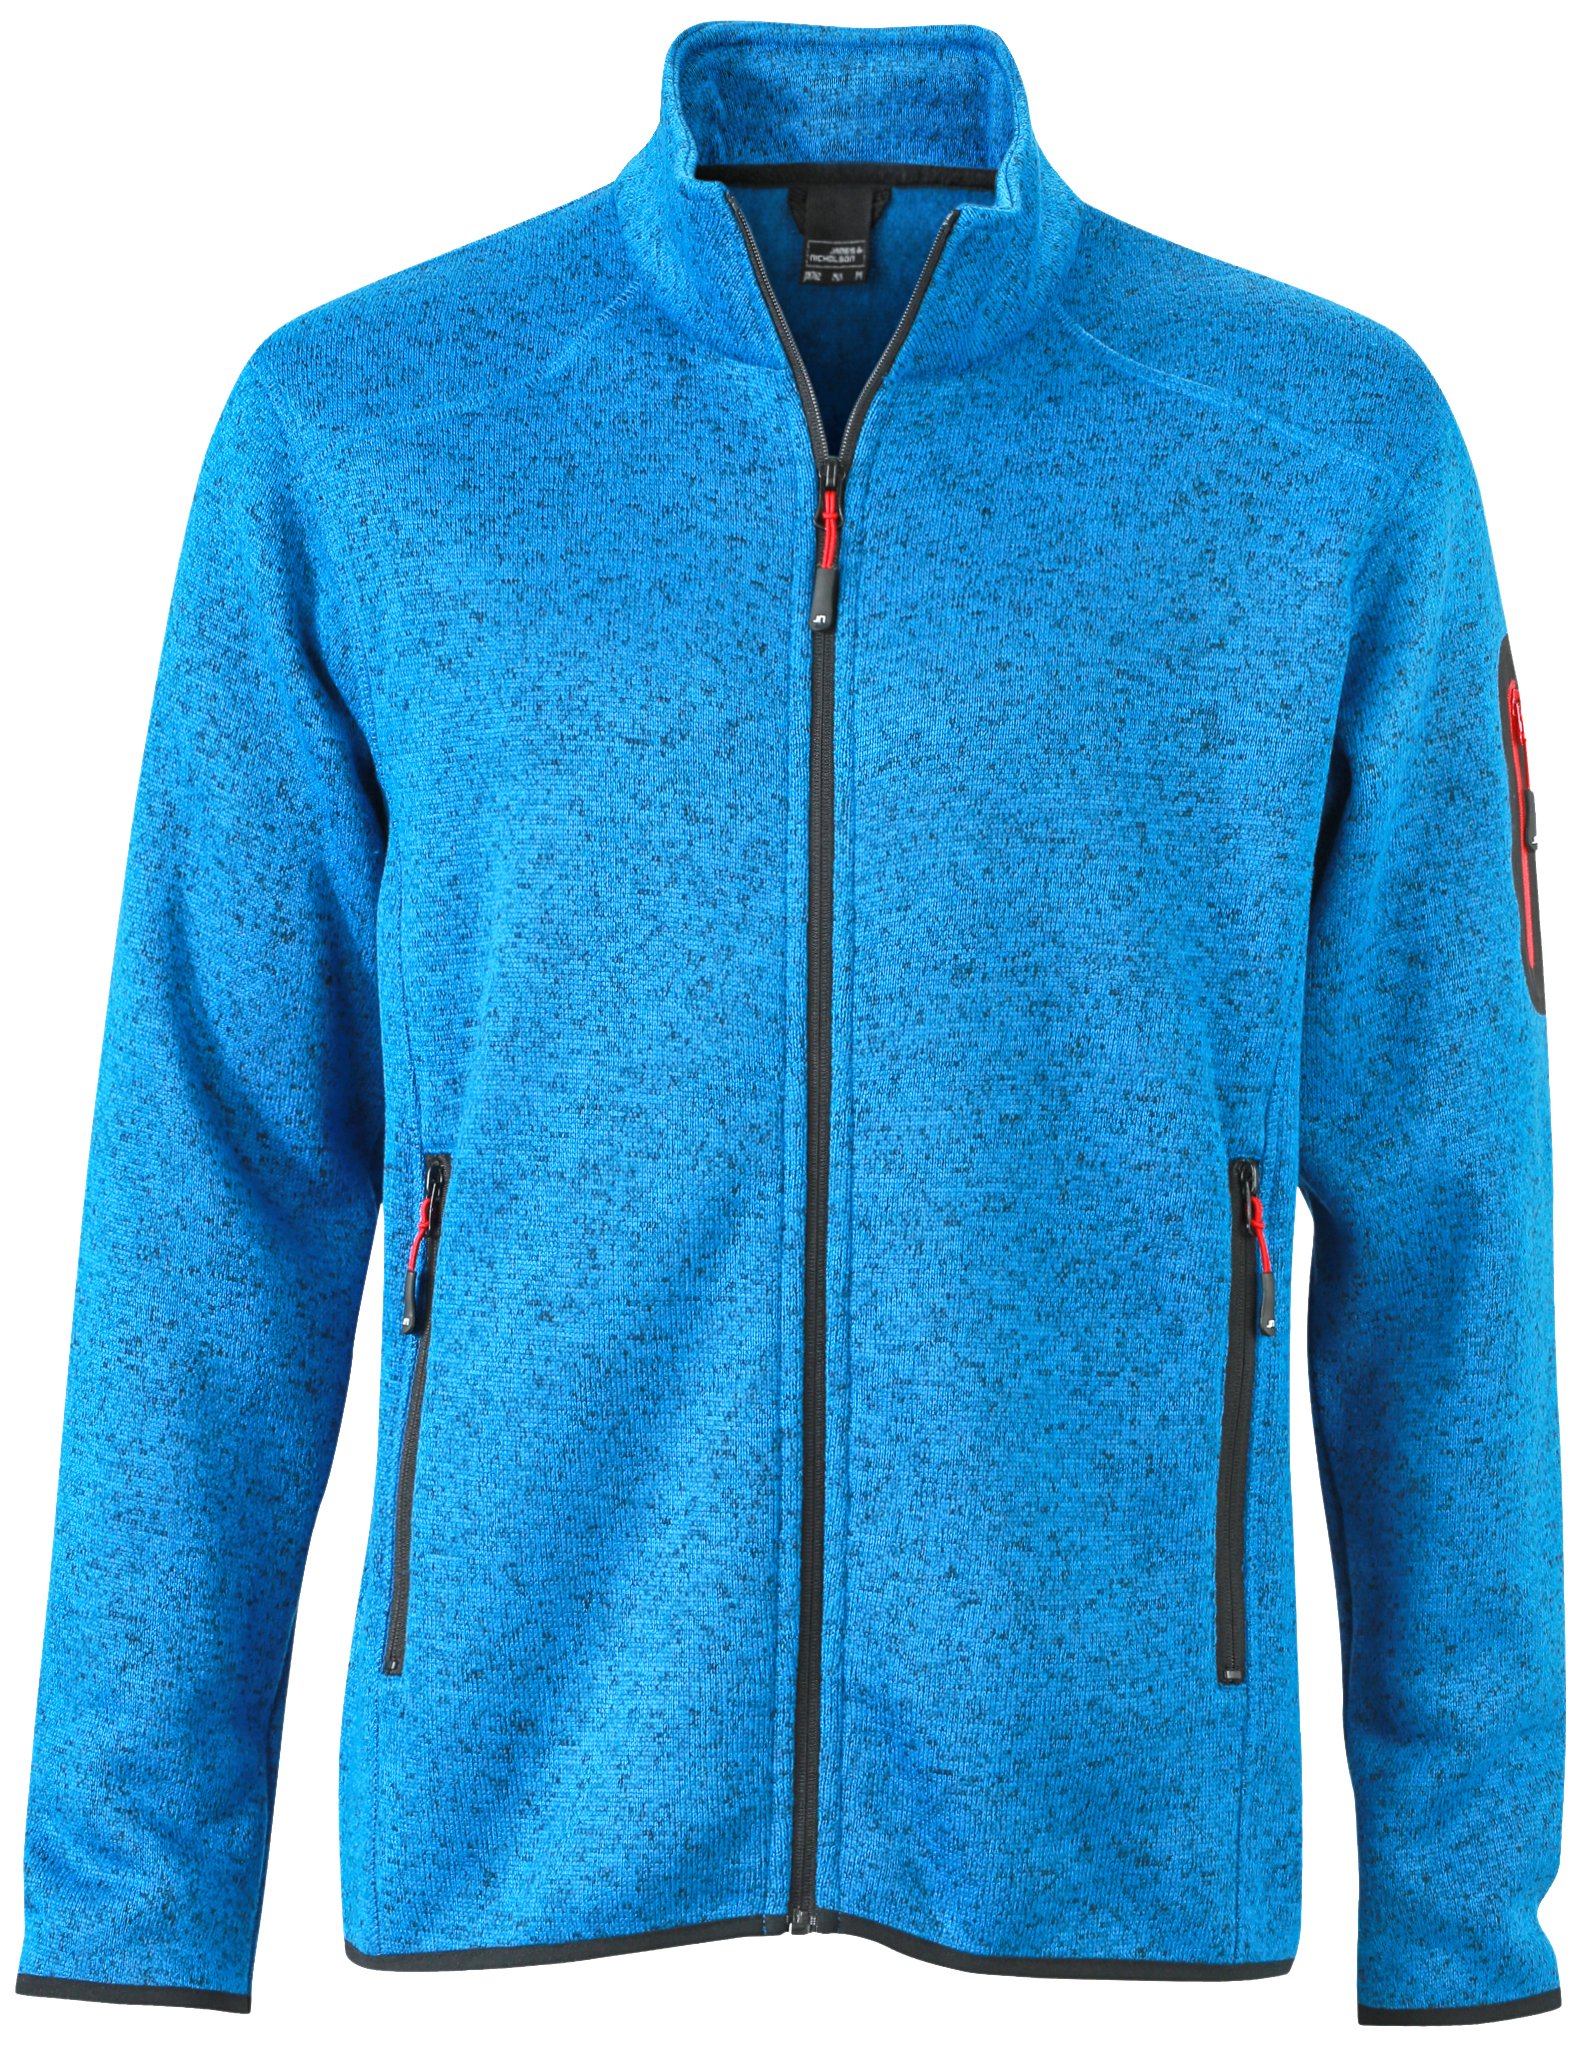 James & Nicholson Herren Jacke Jacke Knitted Fleece Jacket blau (Royal-Melange/Red) XX-Large